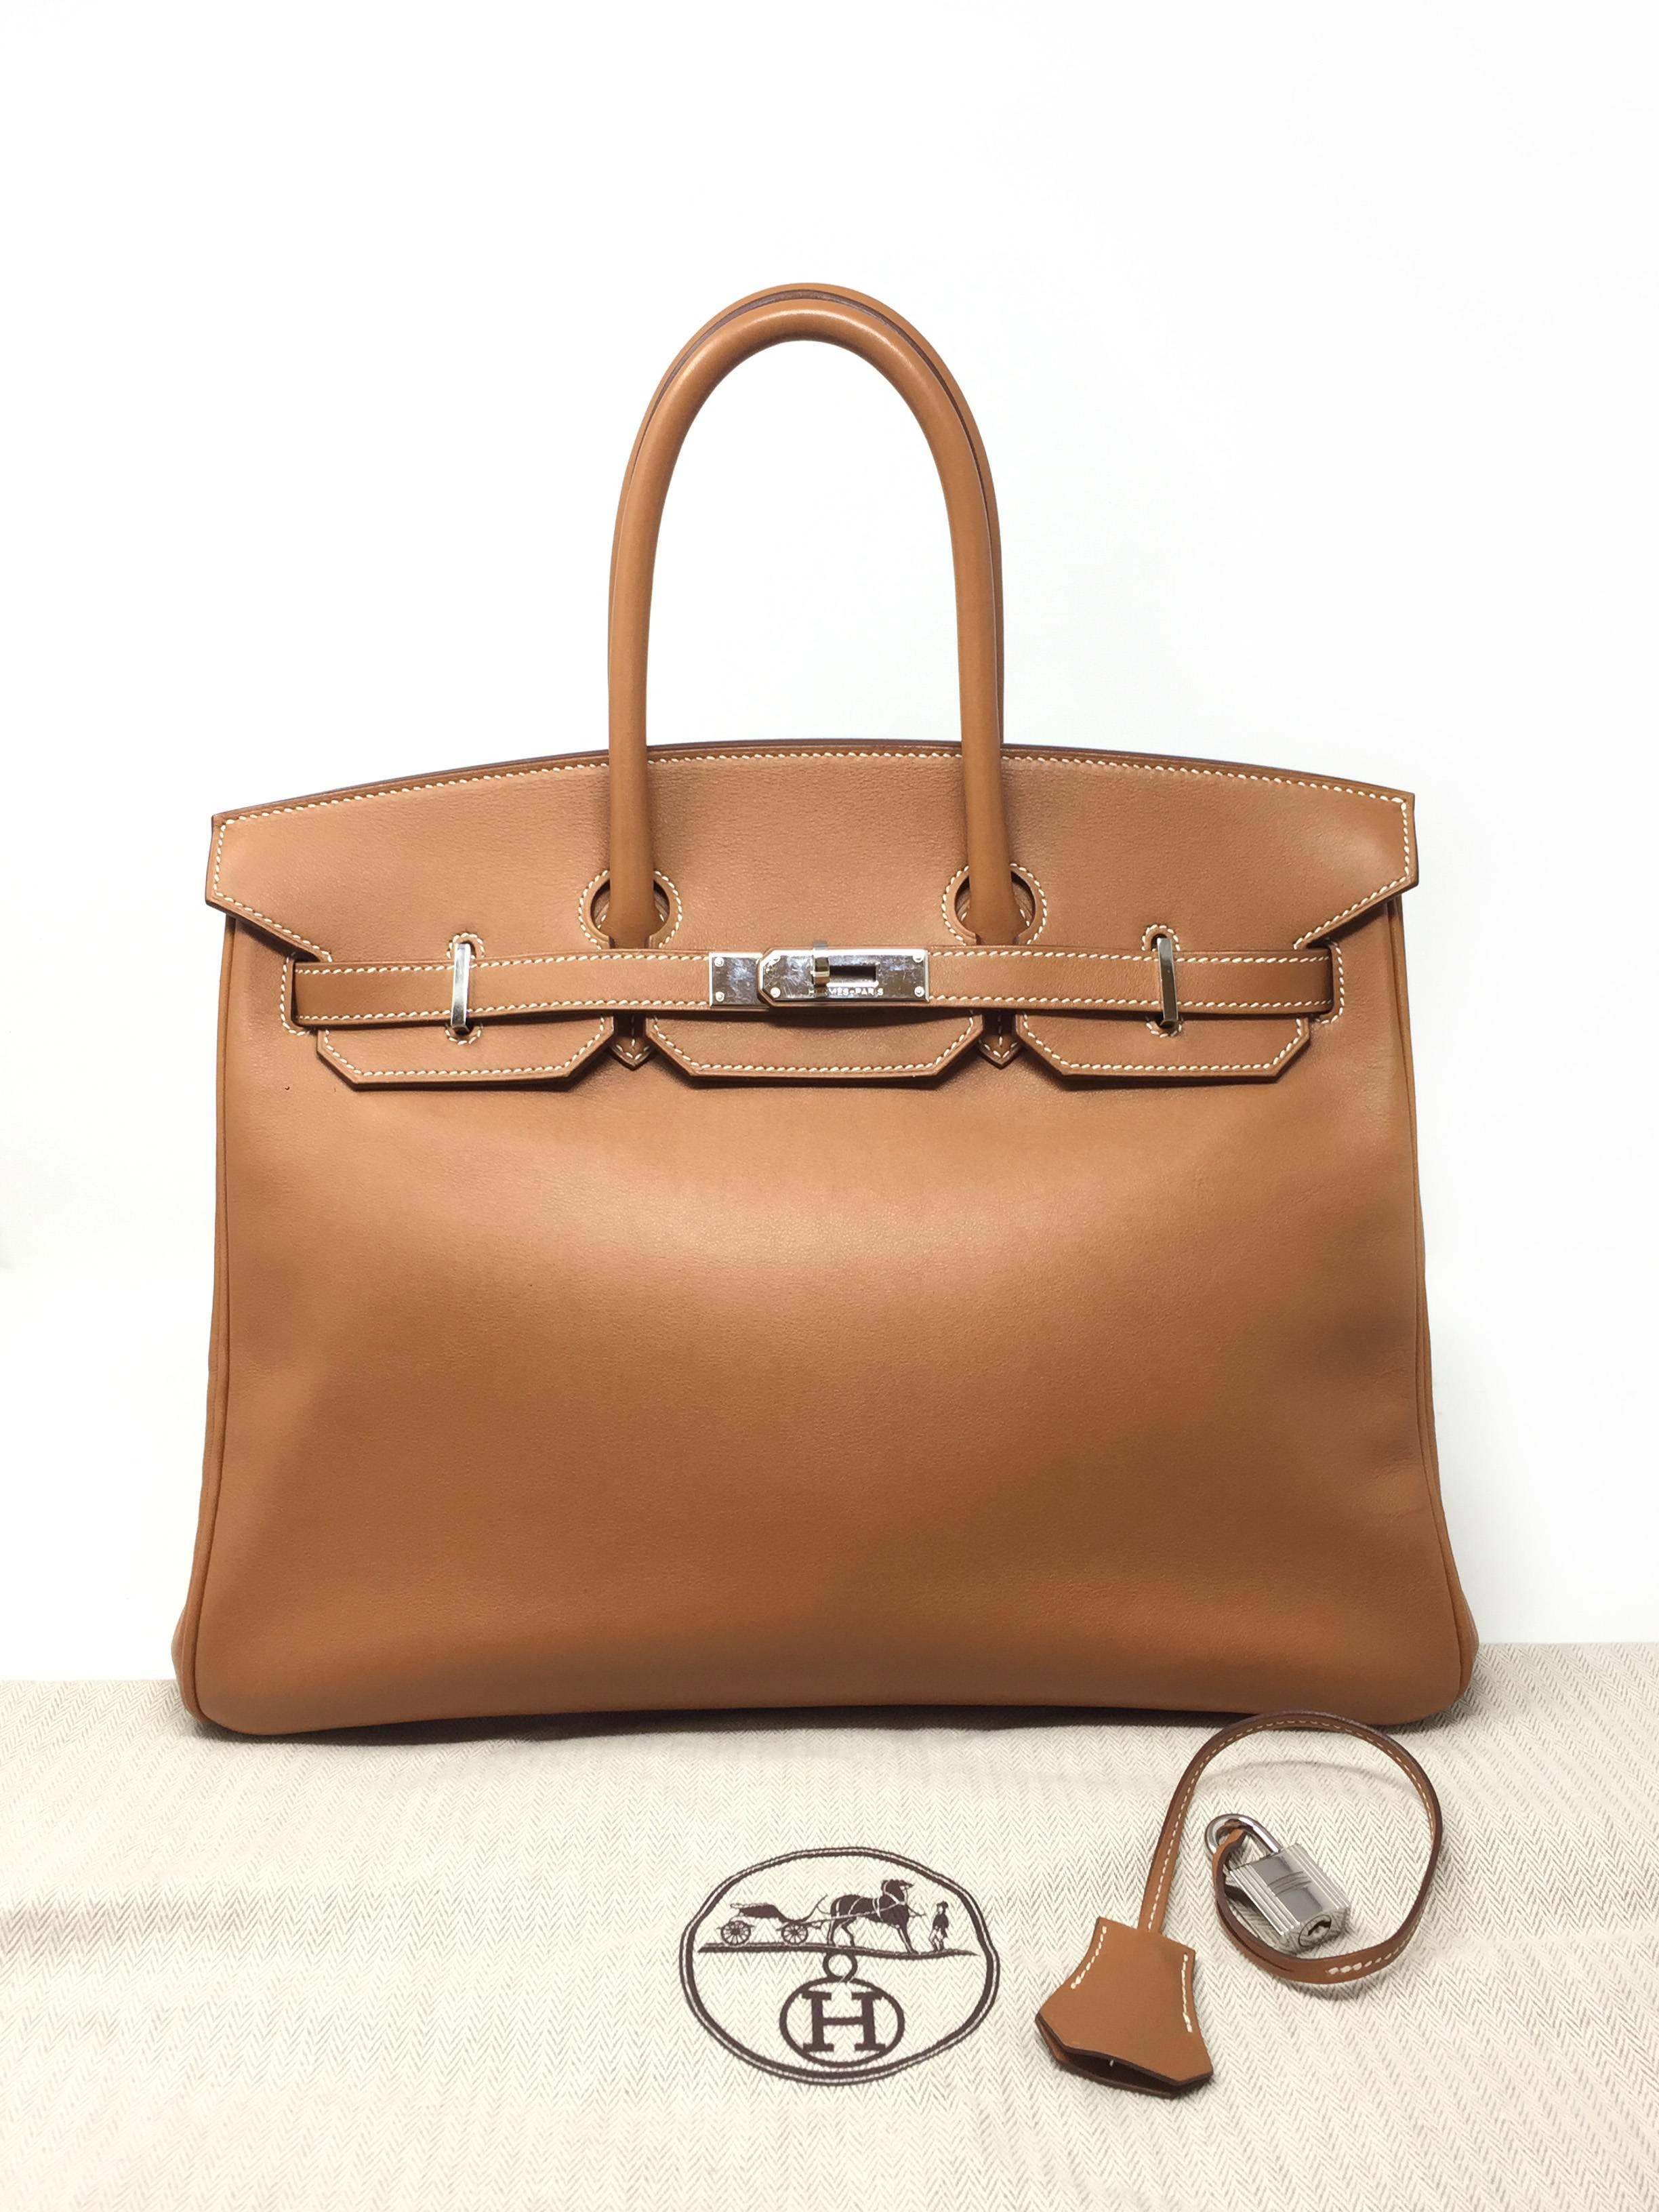 Hermes Paris Sac Birkin 35 Swift Gold Leather Bag, 2008 5